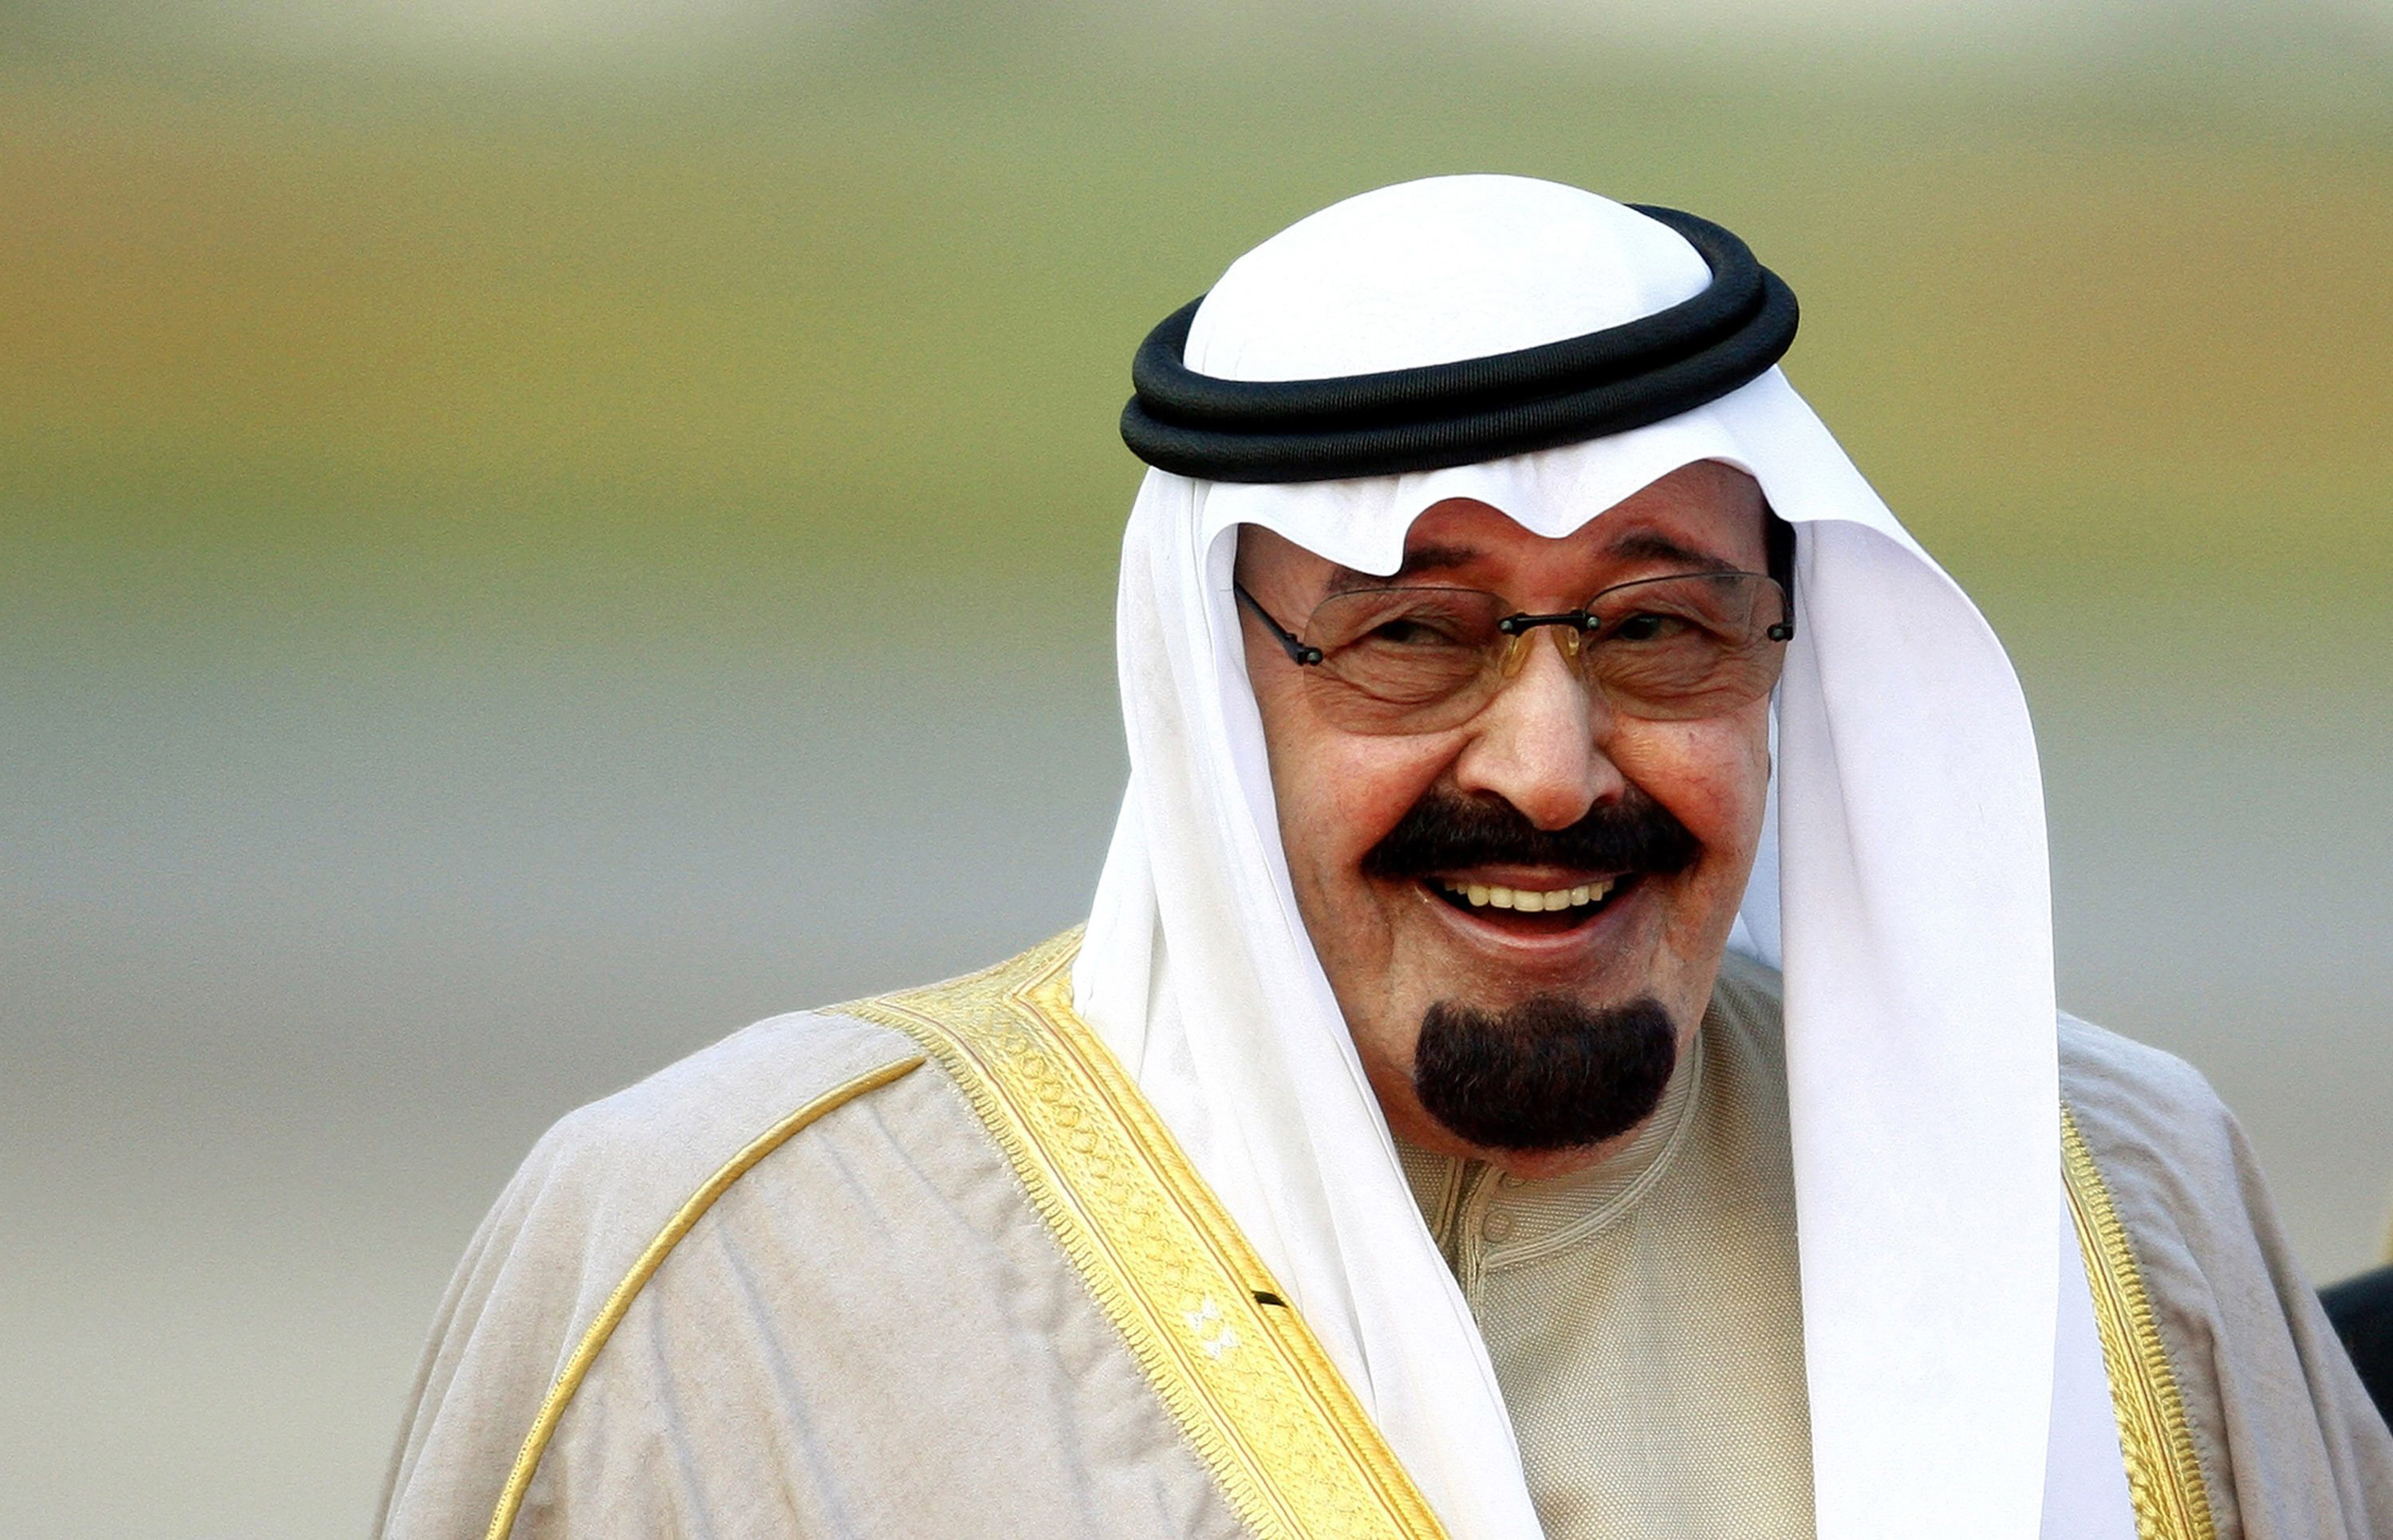 king abdullah bin abdulaziz passed away on friday aged 90 photo reuters